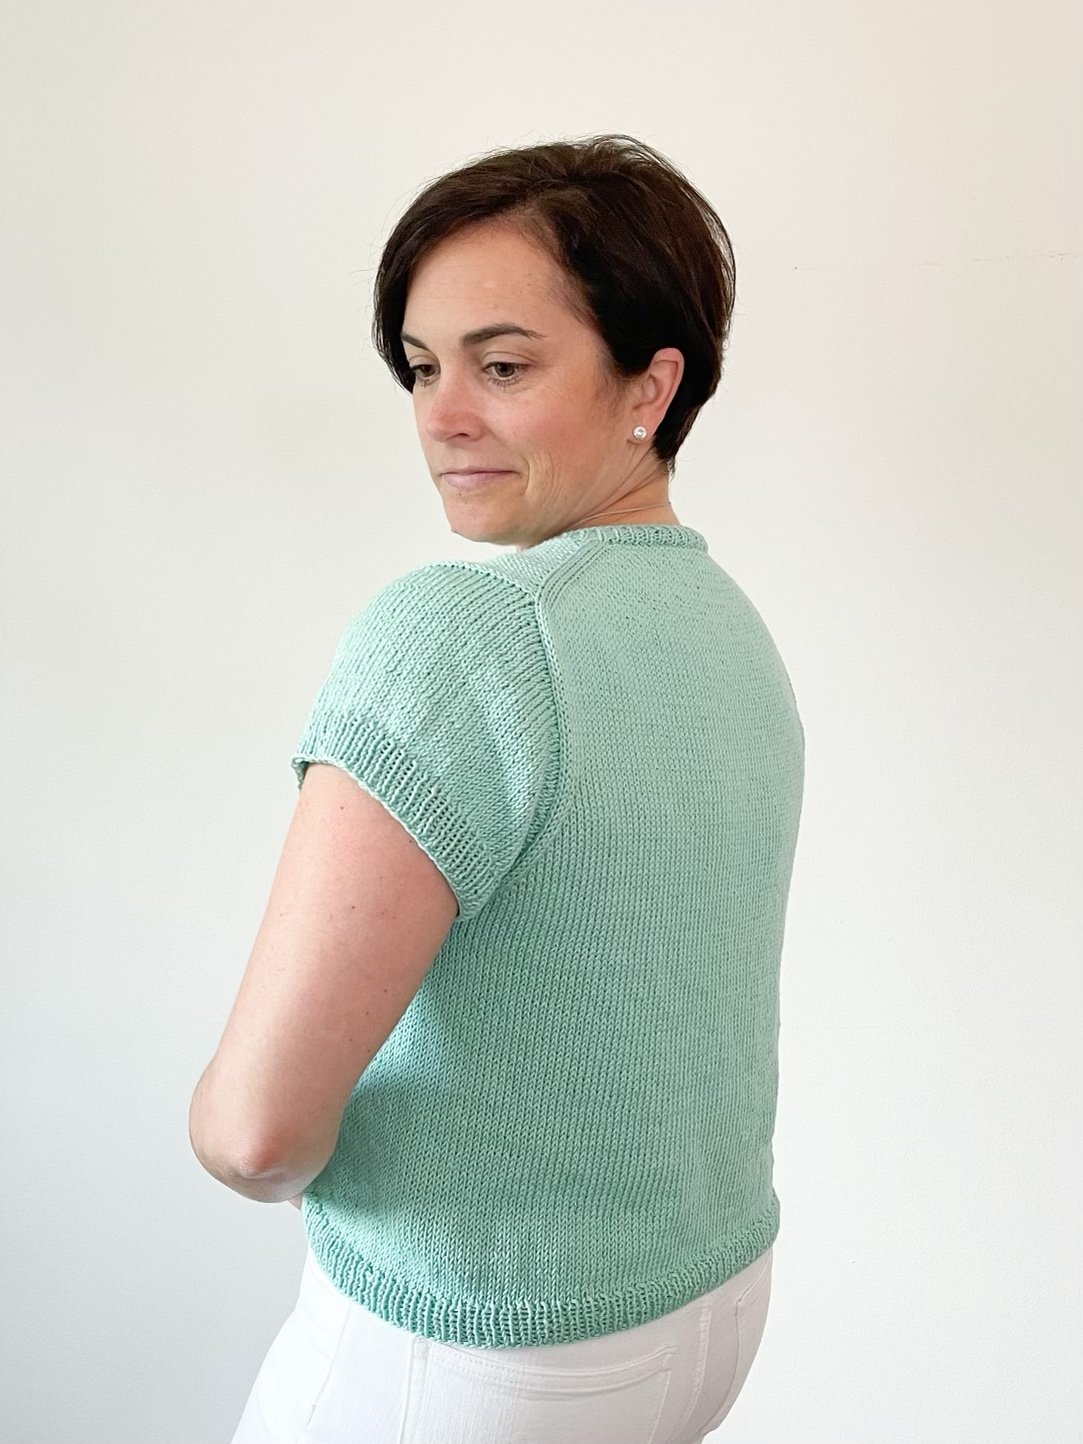 Shirt Tee Knitting Pattern, Darling Jadore, Easy Sweater Knit Pattern